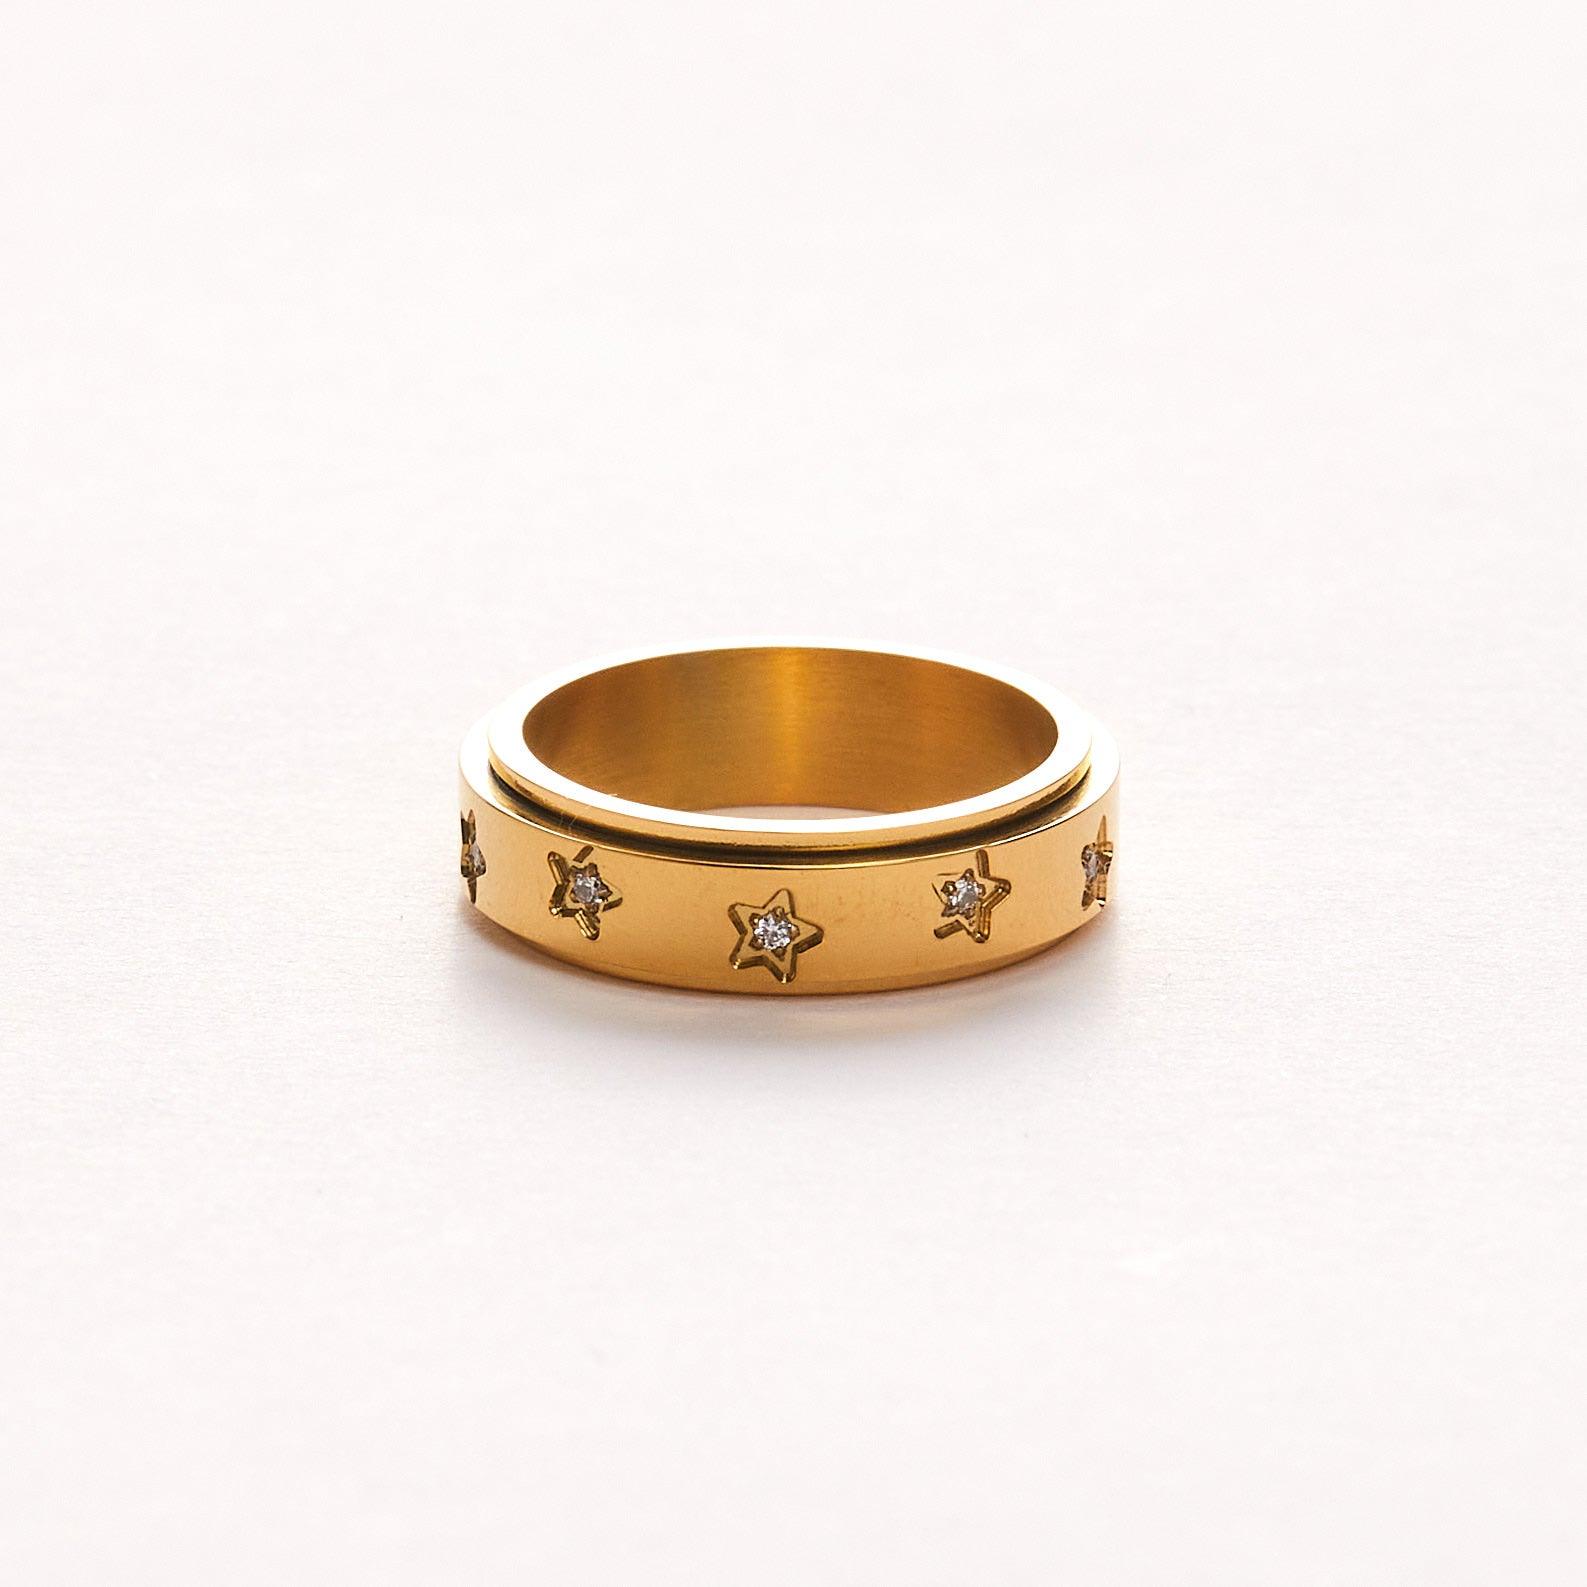 Versace | Accessories | 8k Gold Versace Ring Mens Size 12 | Poshmark